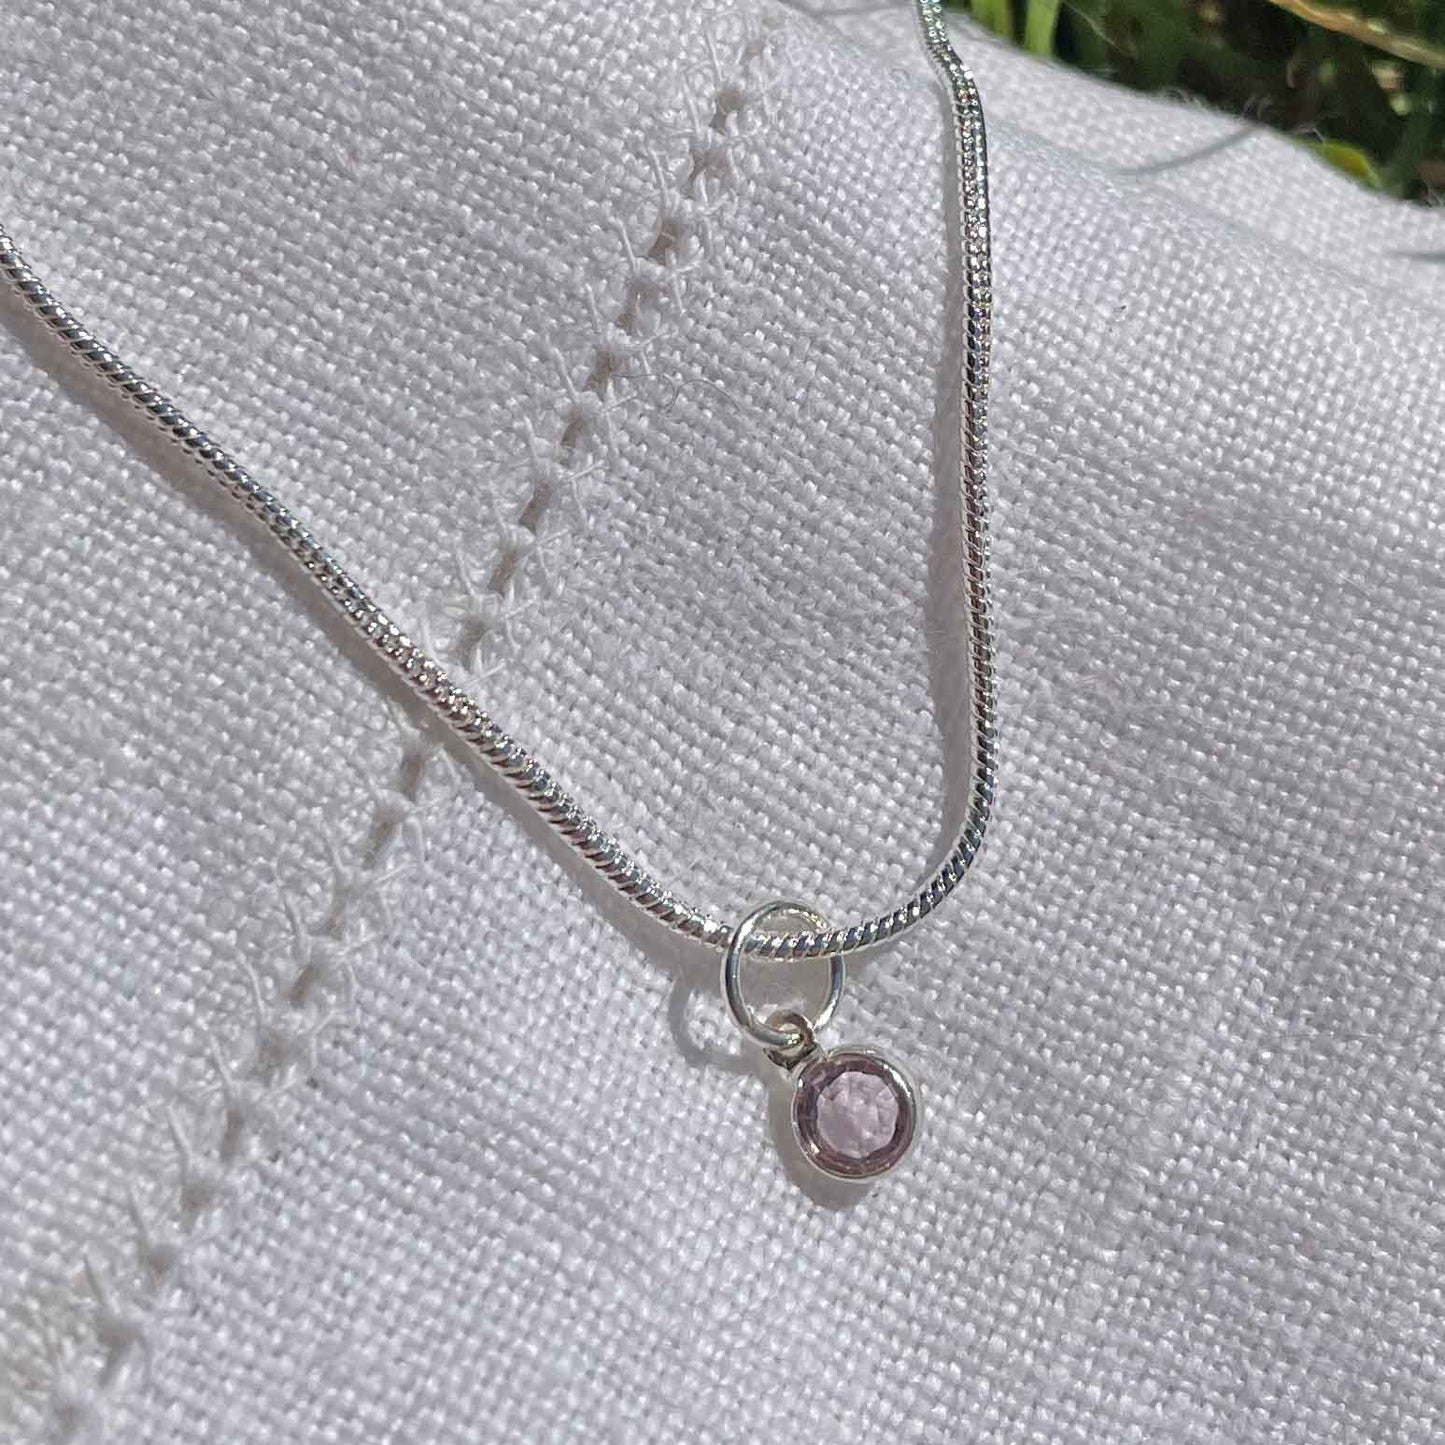 Birthstone Crystal Pendant - Silver Necklace - Welsh Language - June / Light Amethyst